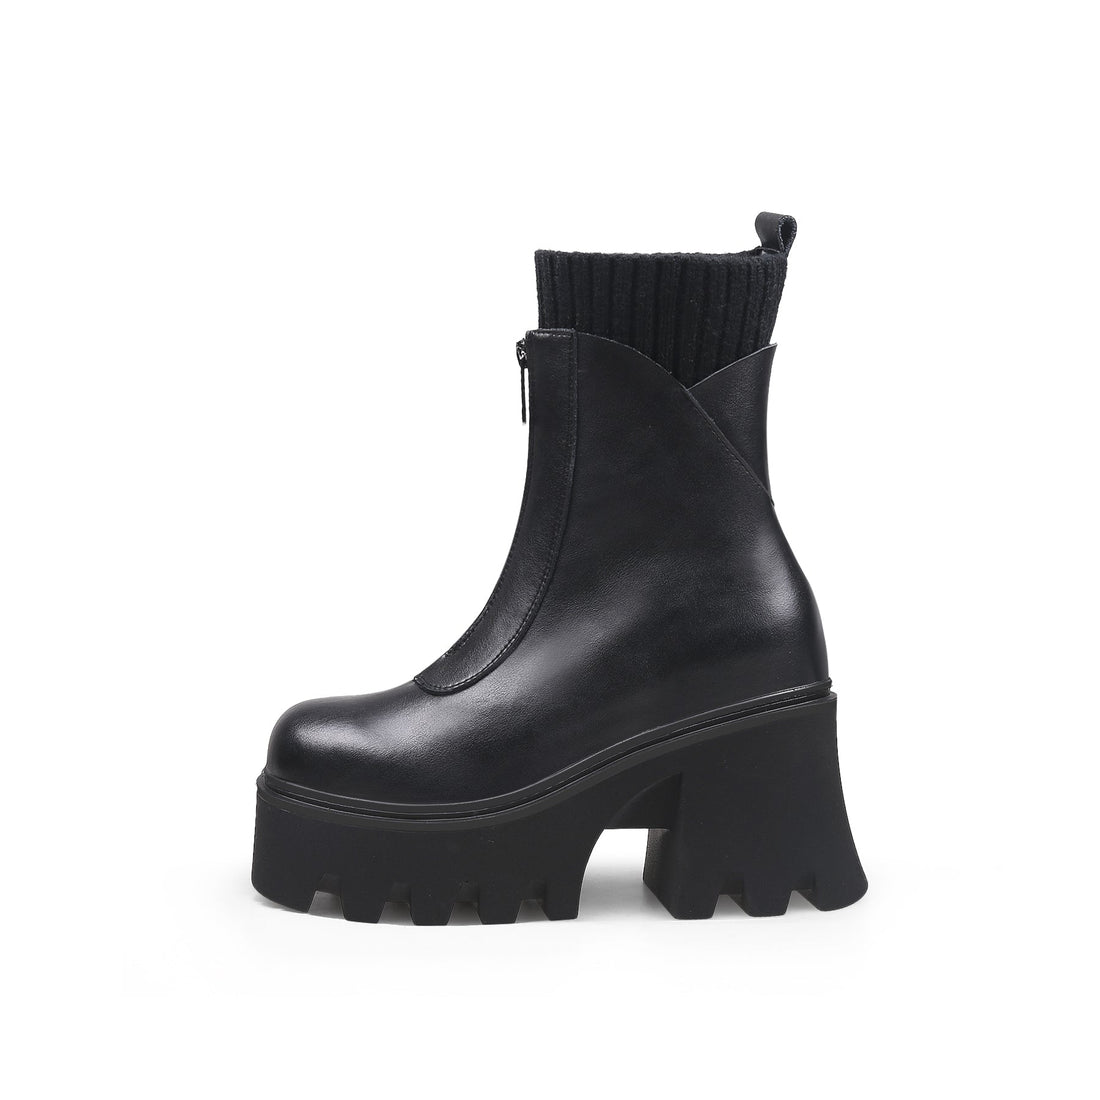 Warm Sock High Platform Black Boots - 0cm